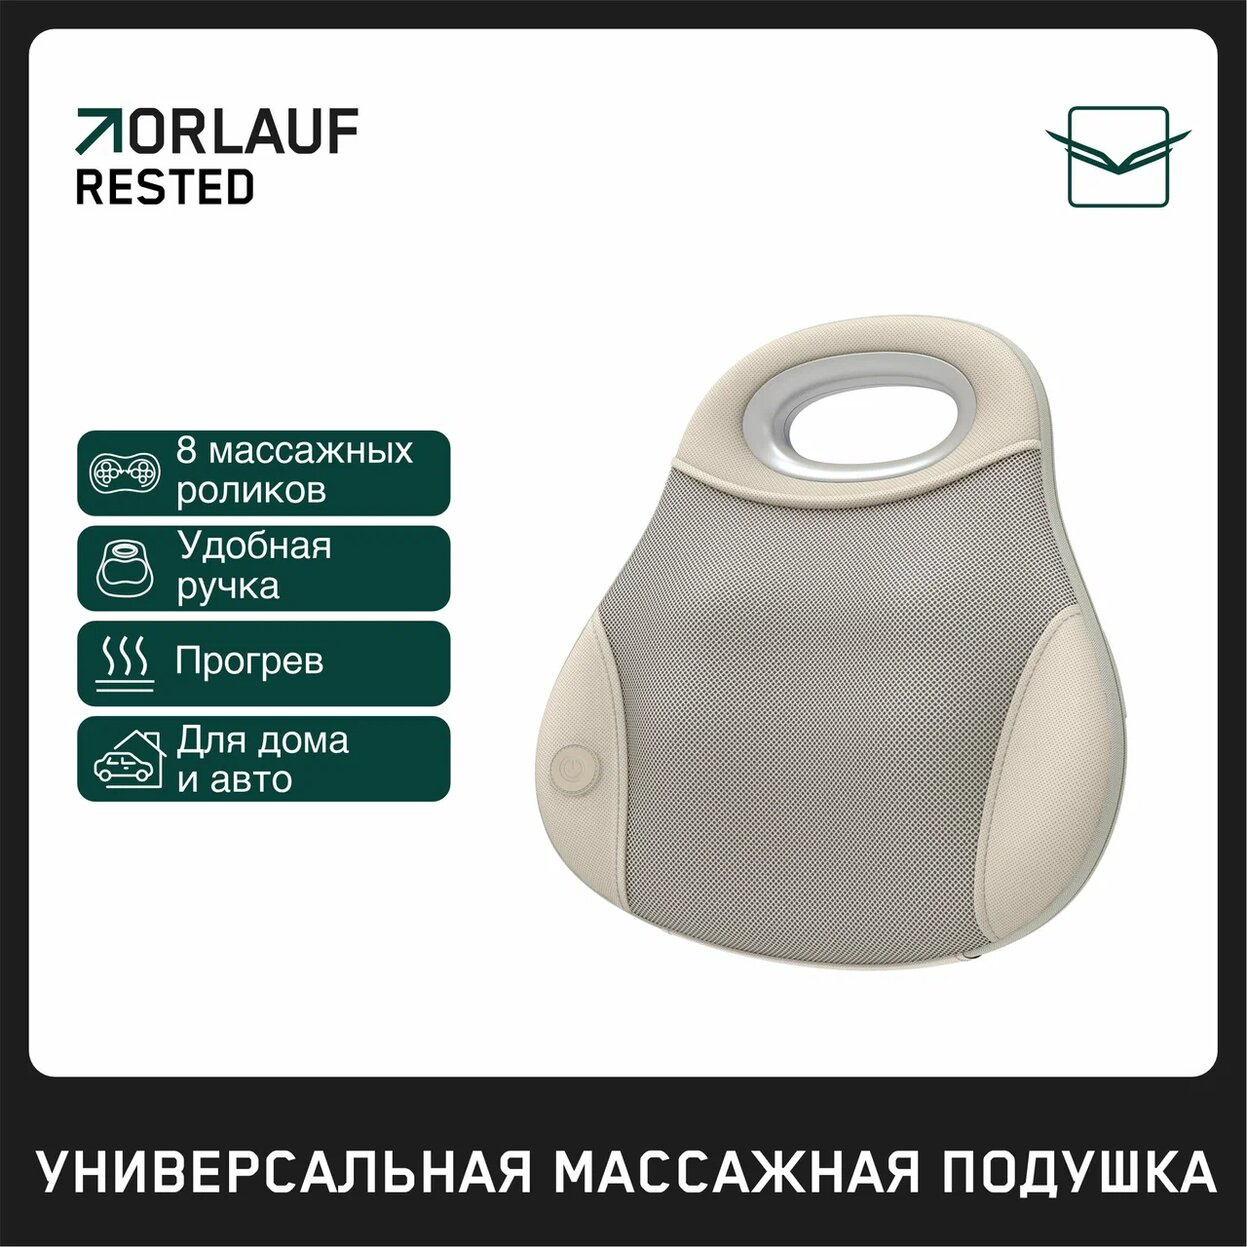 Orlauf Rested из каталога устройств для массажа в Волгограде по цене 11900 ₽